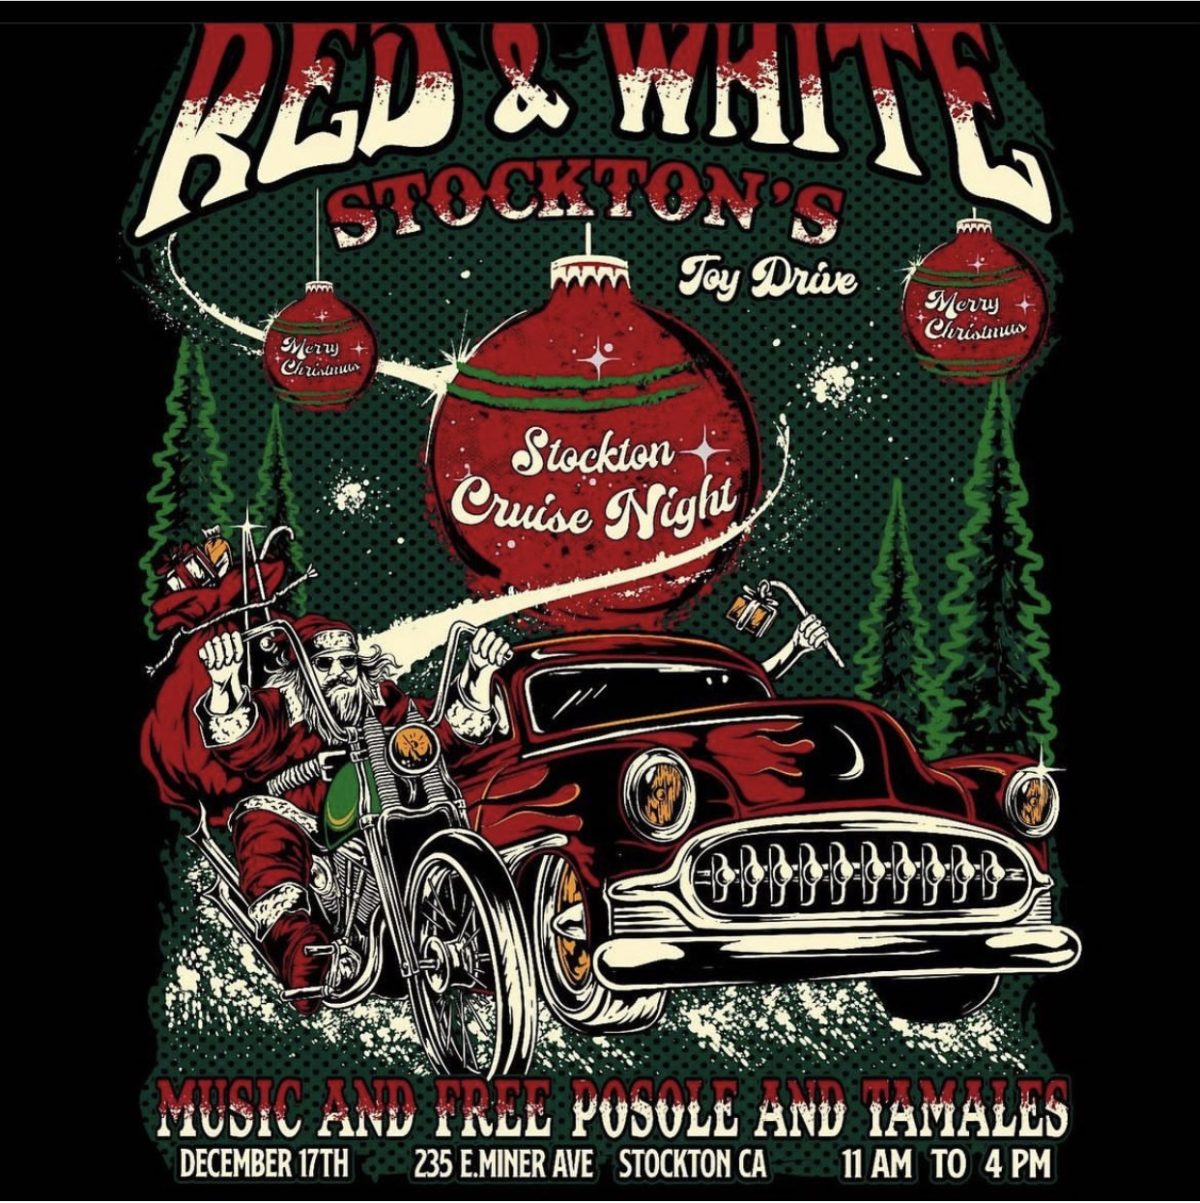 Red & White Stockton’s Toy Drive